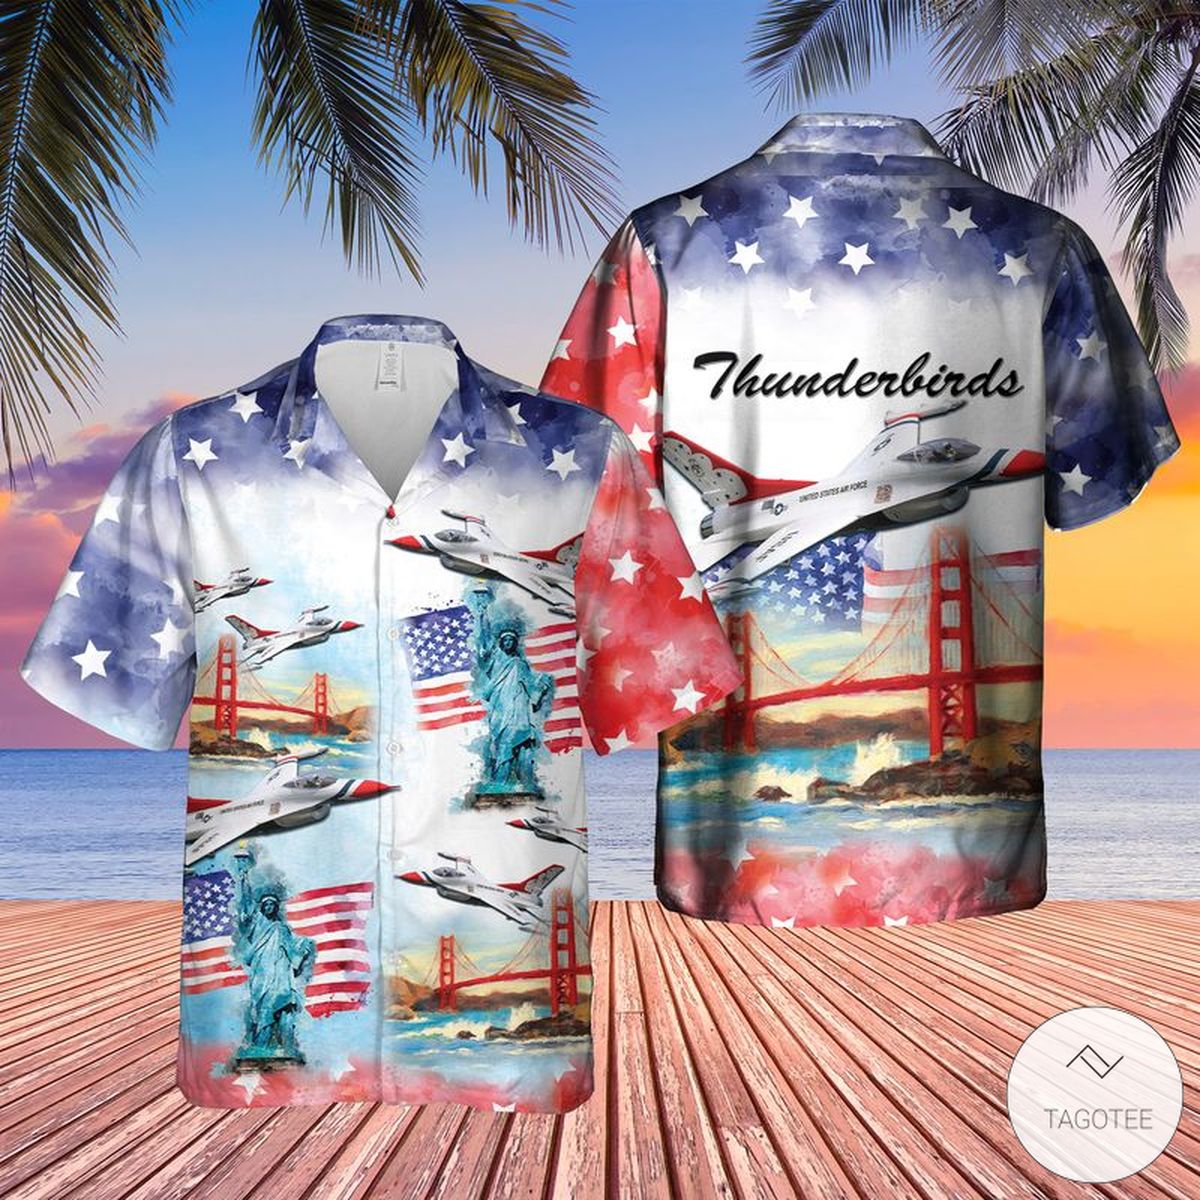 Thunderbirds USAF Air Show 4th of July Hawaiian Shirt